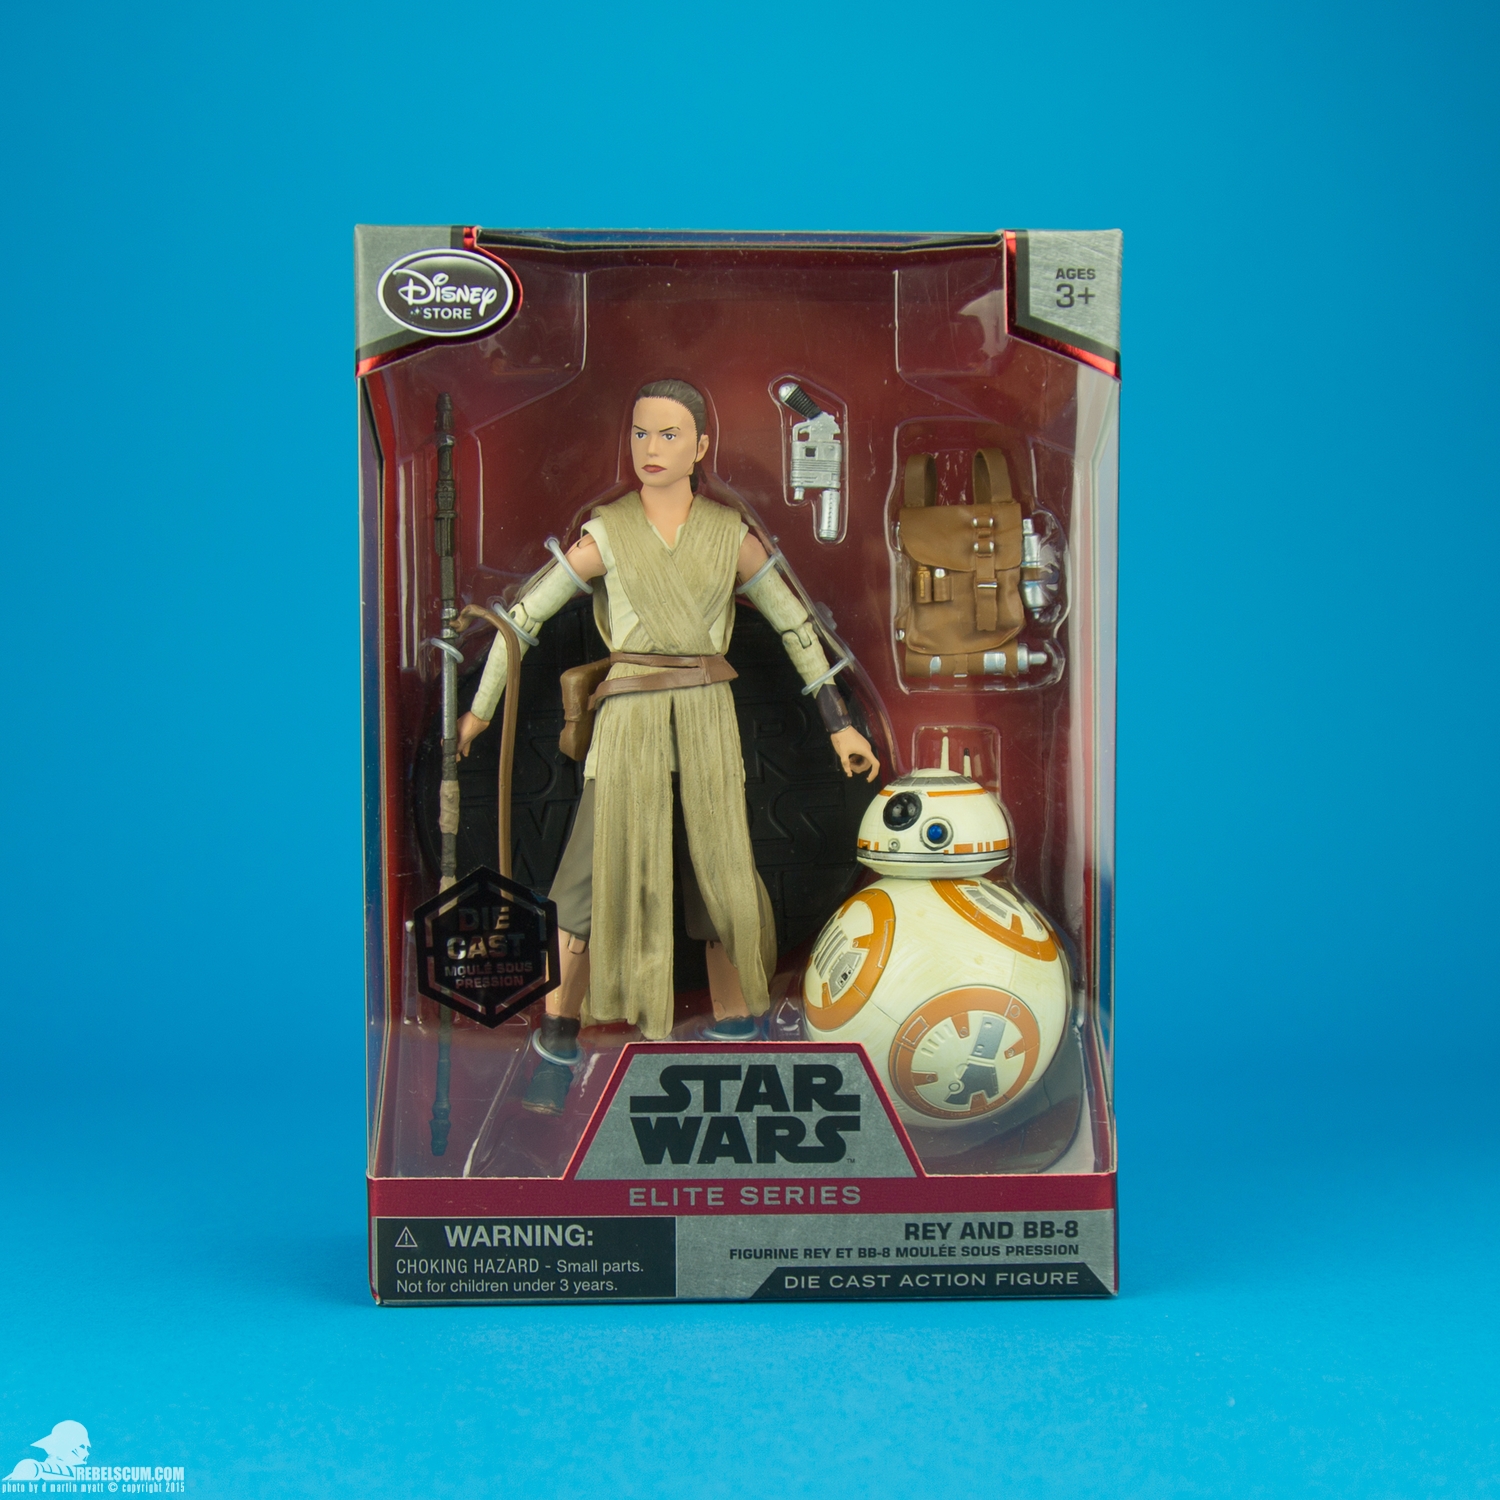 Rey-and-BB-8-Disney-Stores-Elite-Series-Diecast-Figure-007.jpg